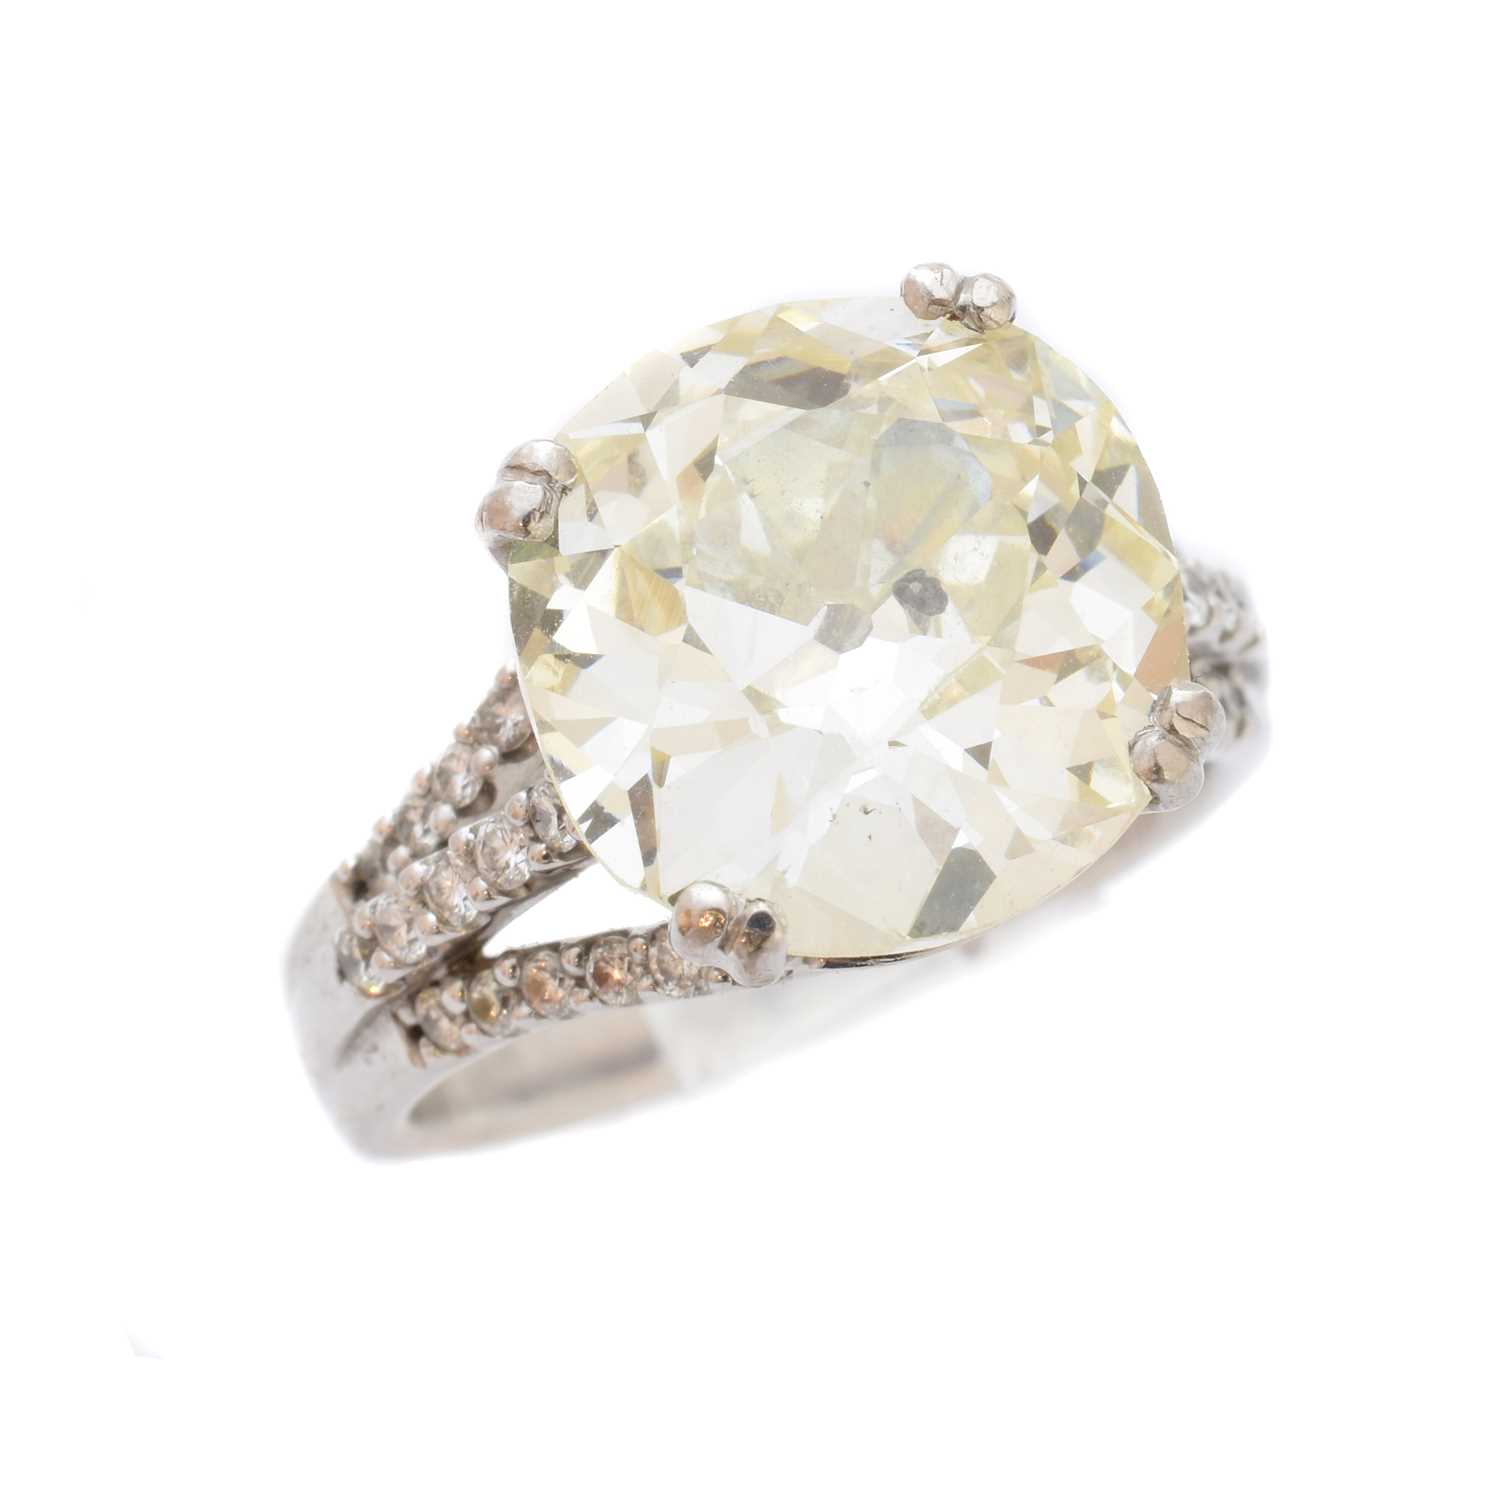 152 - An impressive diamond single-stone ring,